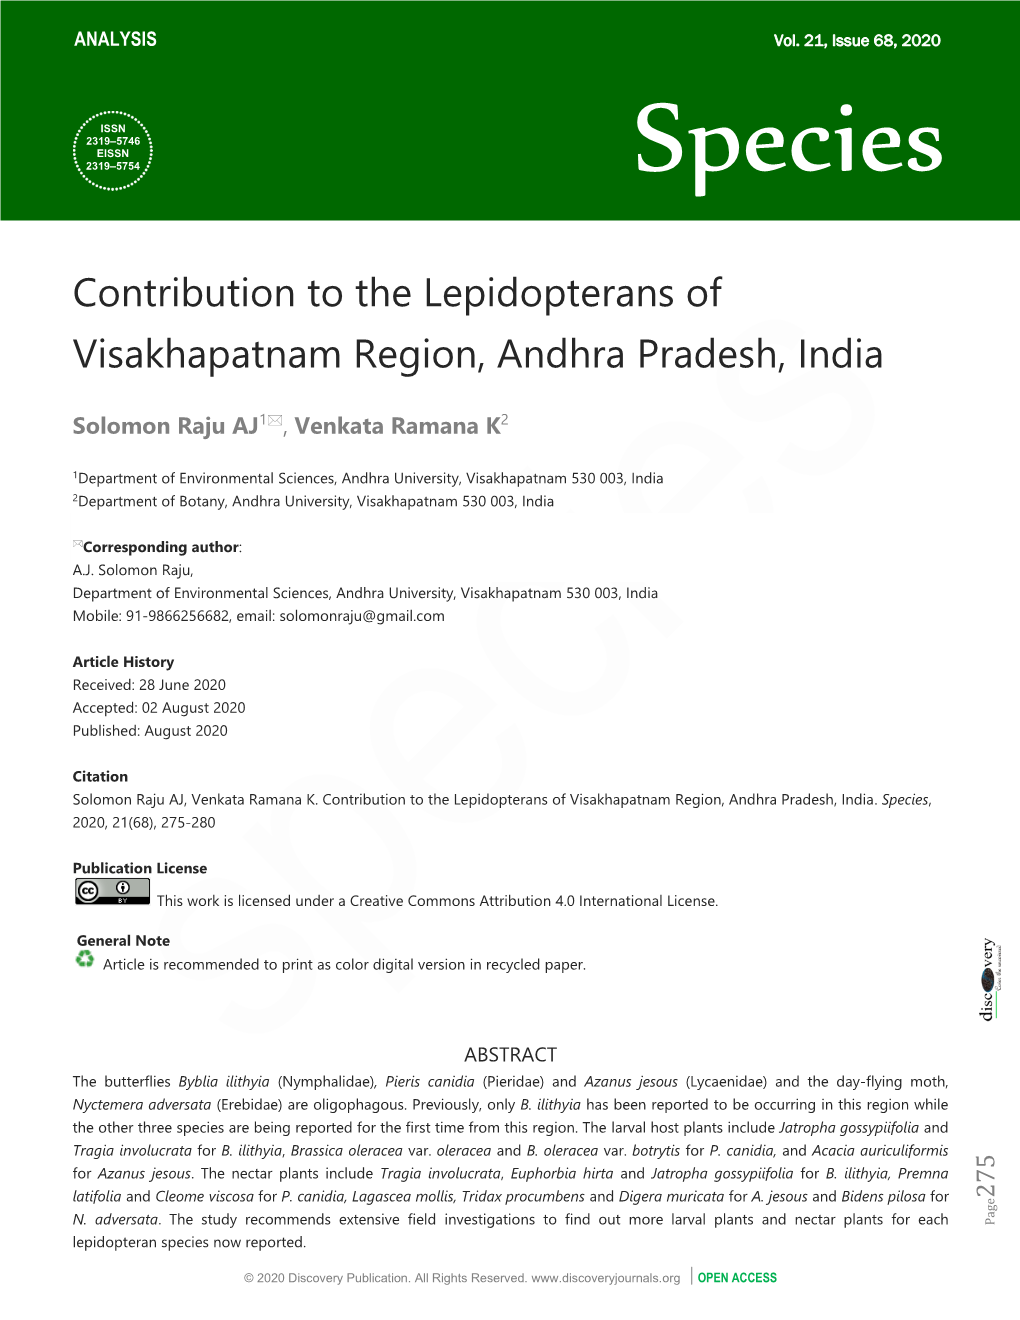 Contribution to the Lepidopterans of Visakhapatnam Region, Andhra Pradesh, India